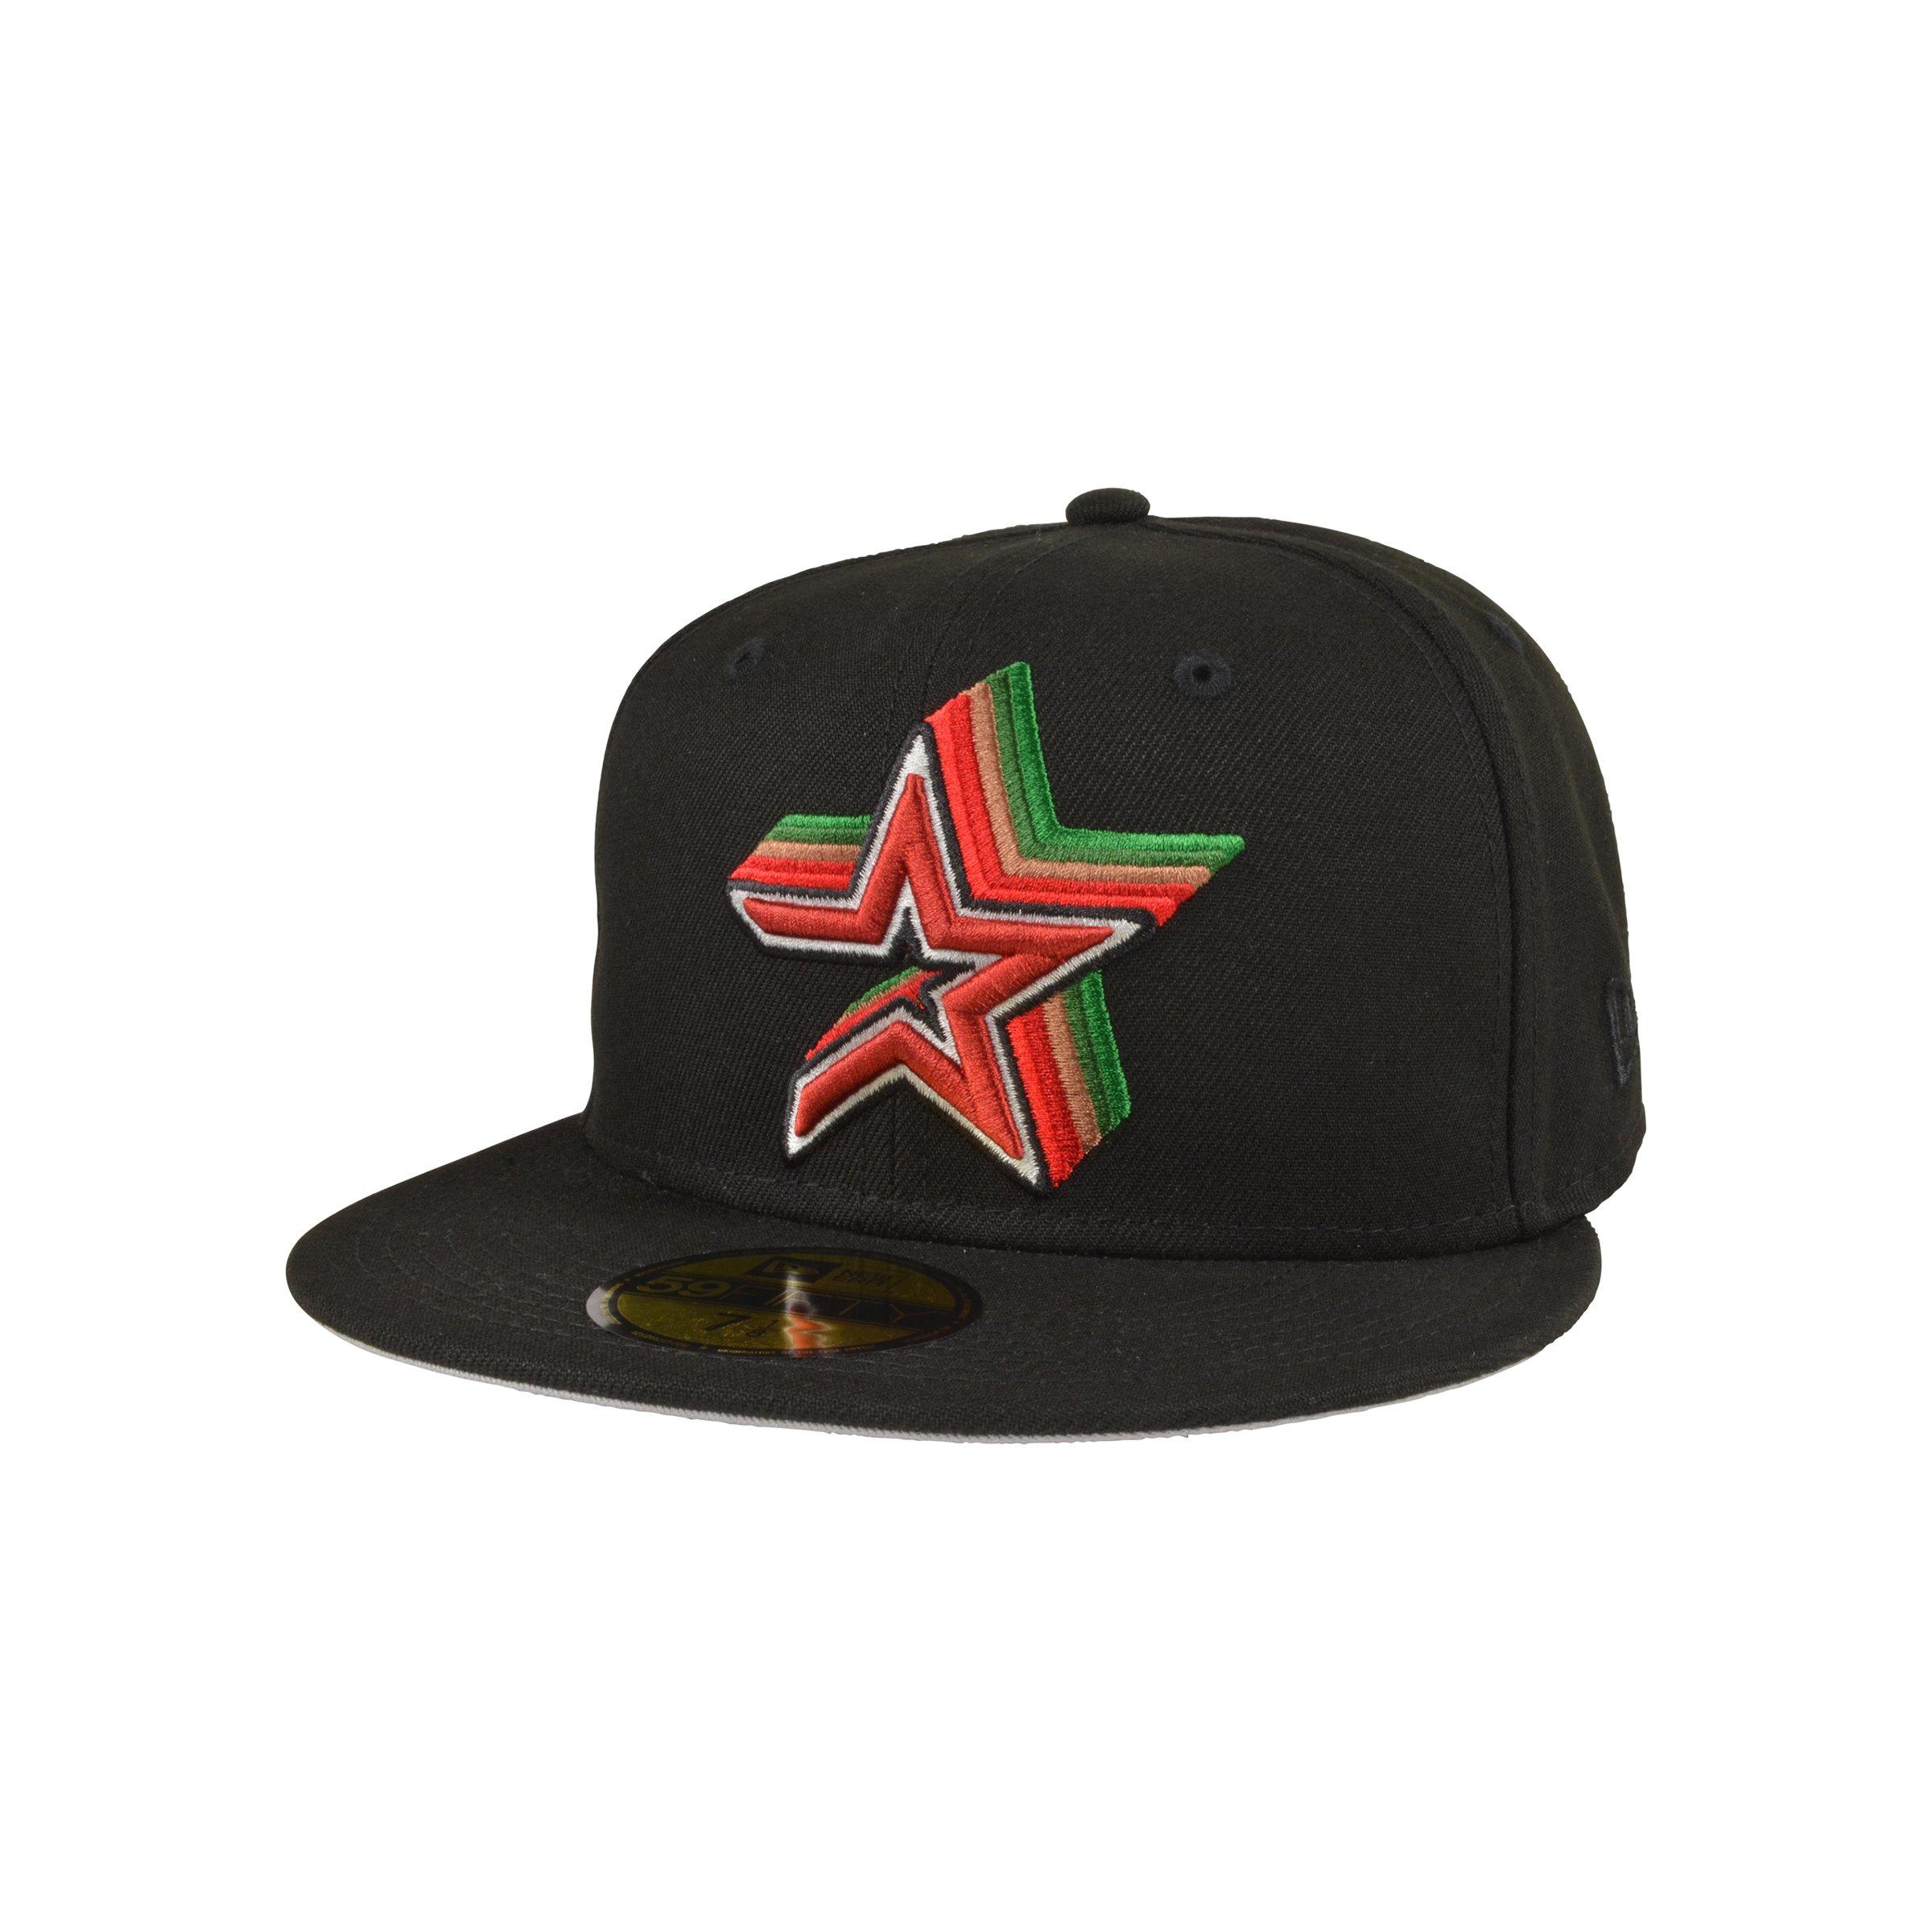 New Era 59FIFTY MLB Houston Astros Tri-Tone Team Fitted Hat 7